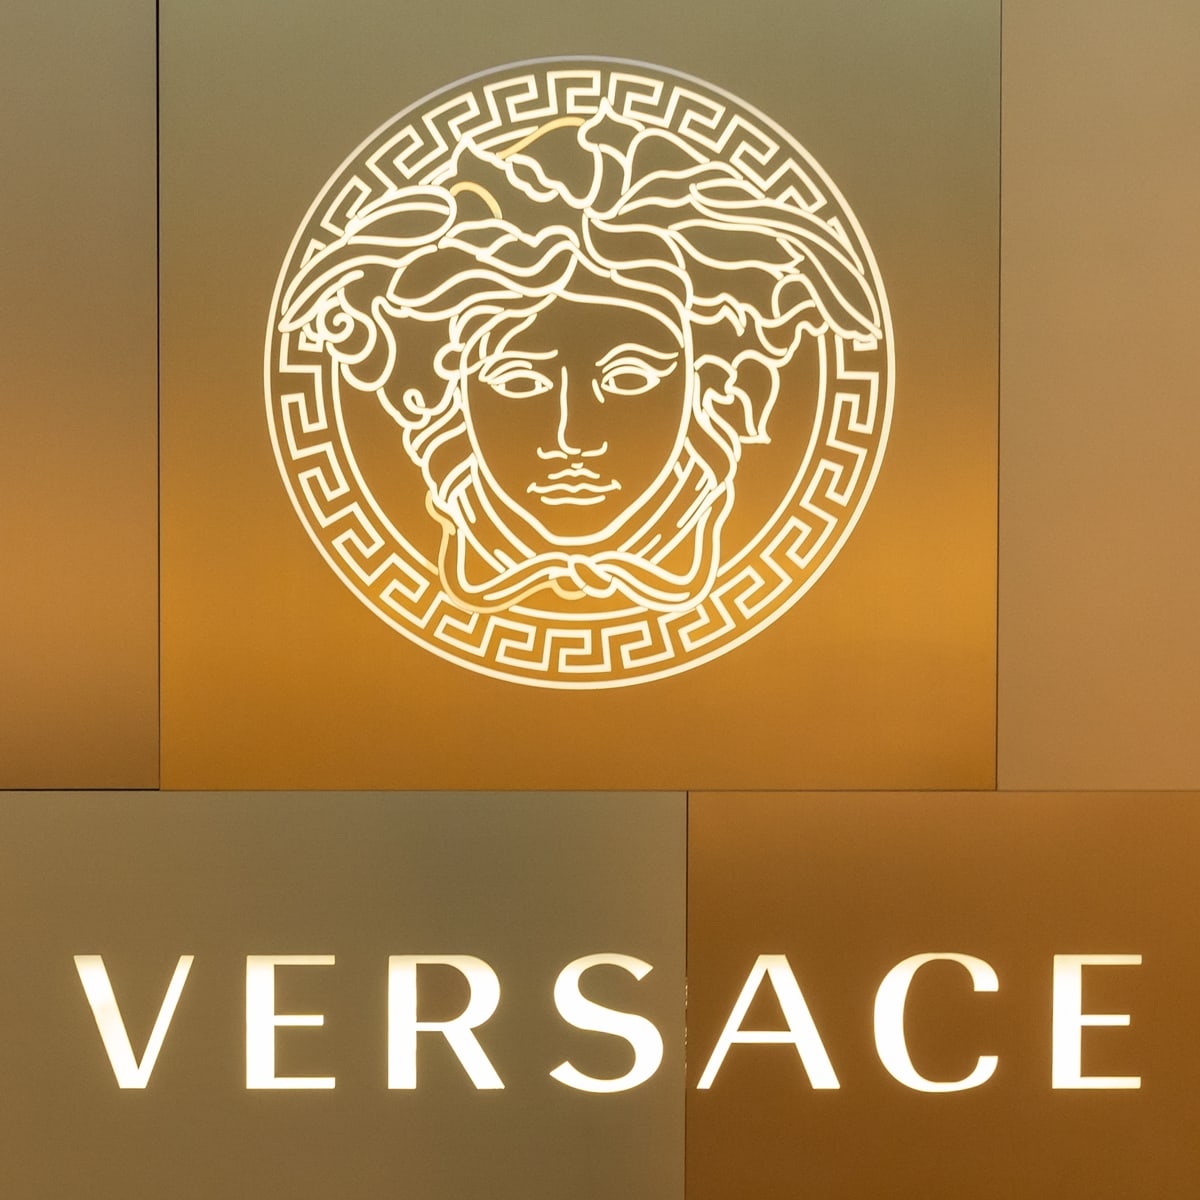 The Versace logo is the head of the Greek mythological figure Medusa